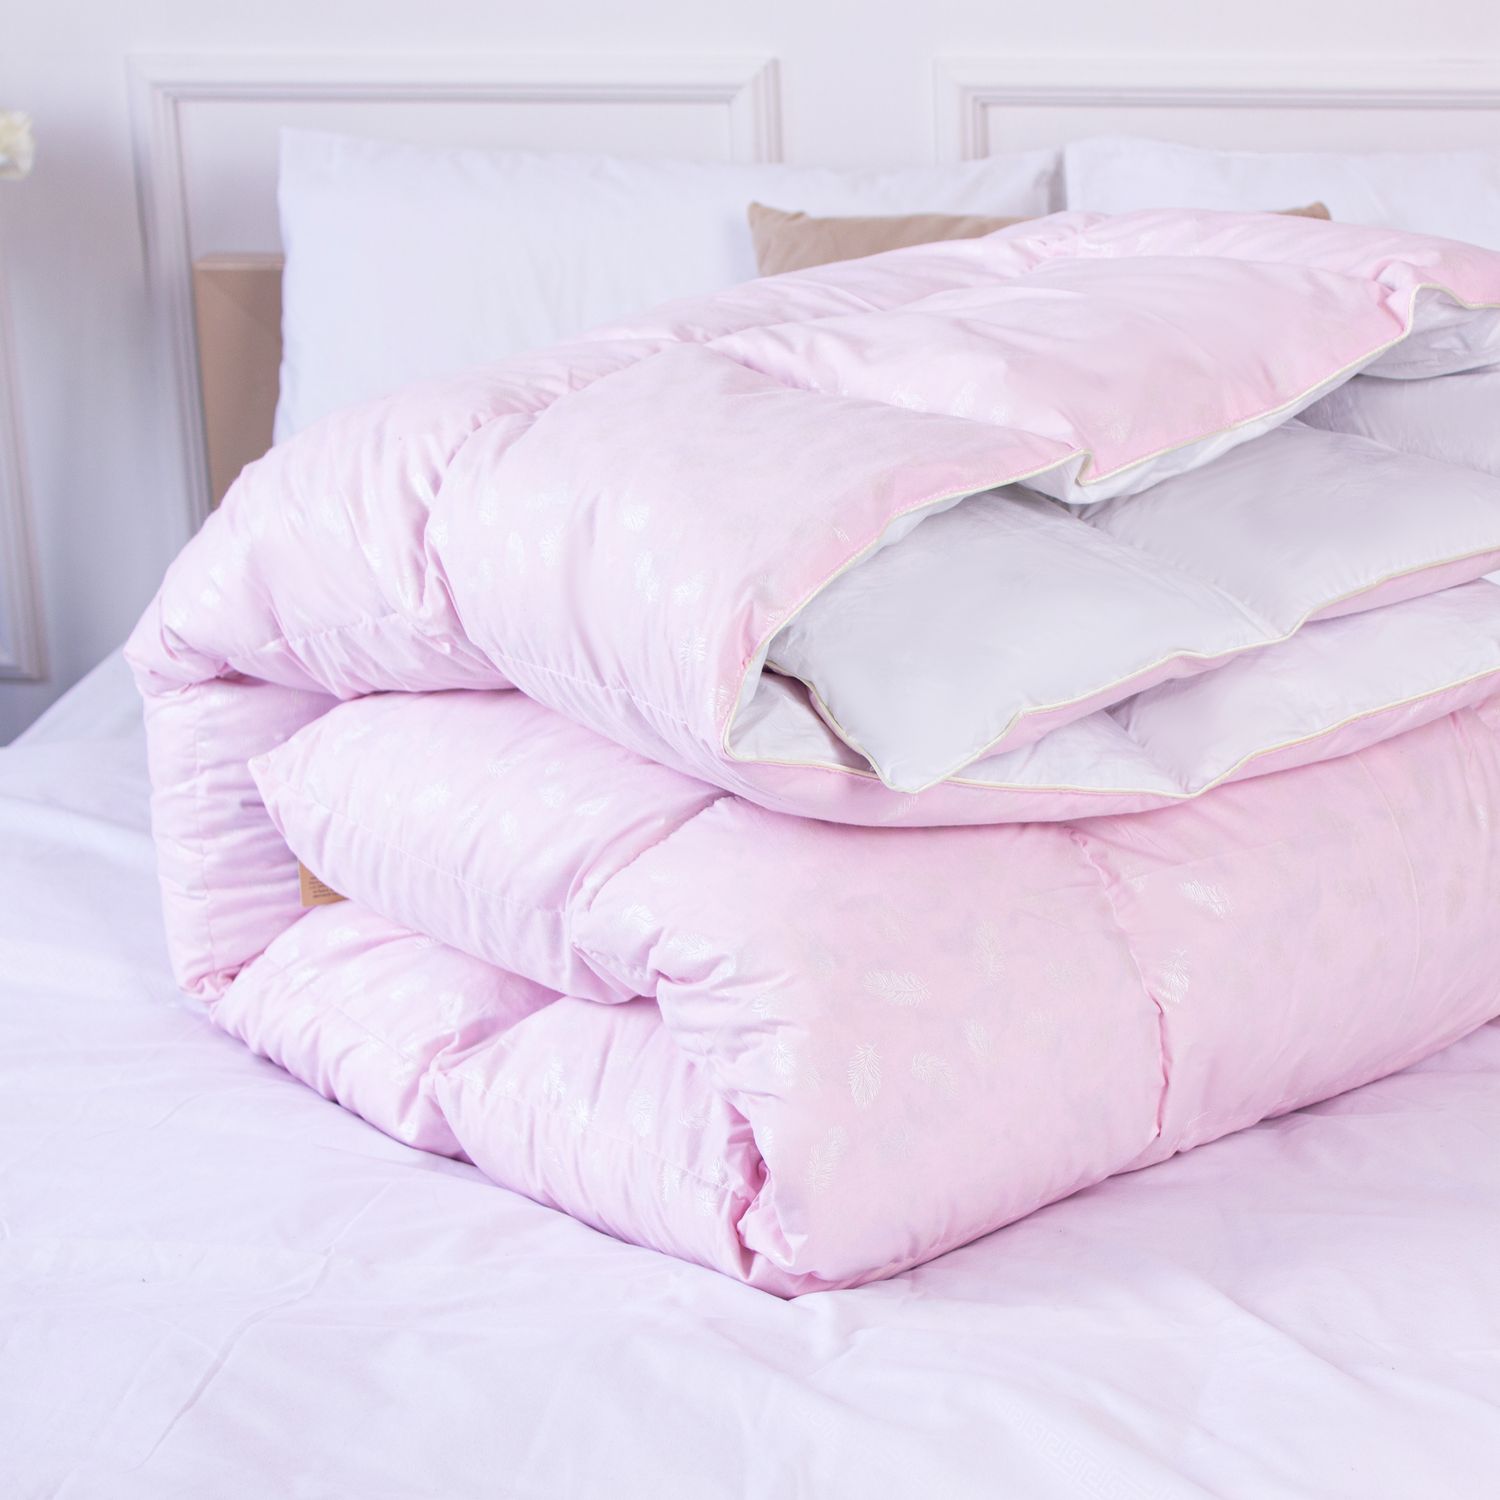 Одеяло пуховое MirSon Karmen №1862 Bio-Pink, 50% пух, евростандарт, 220x200, розовое (2200003014921) - фото 3